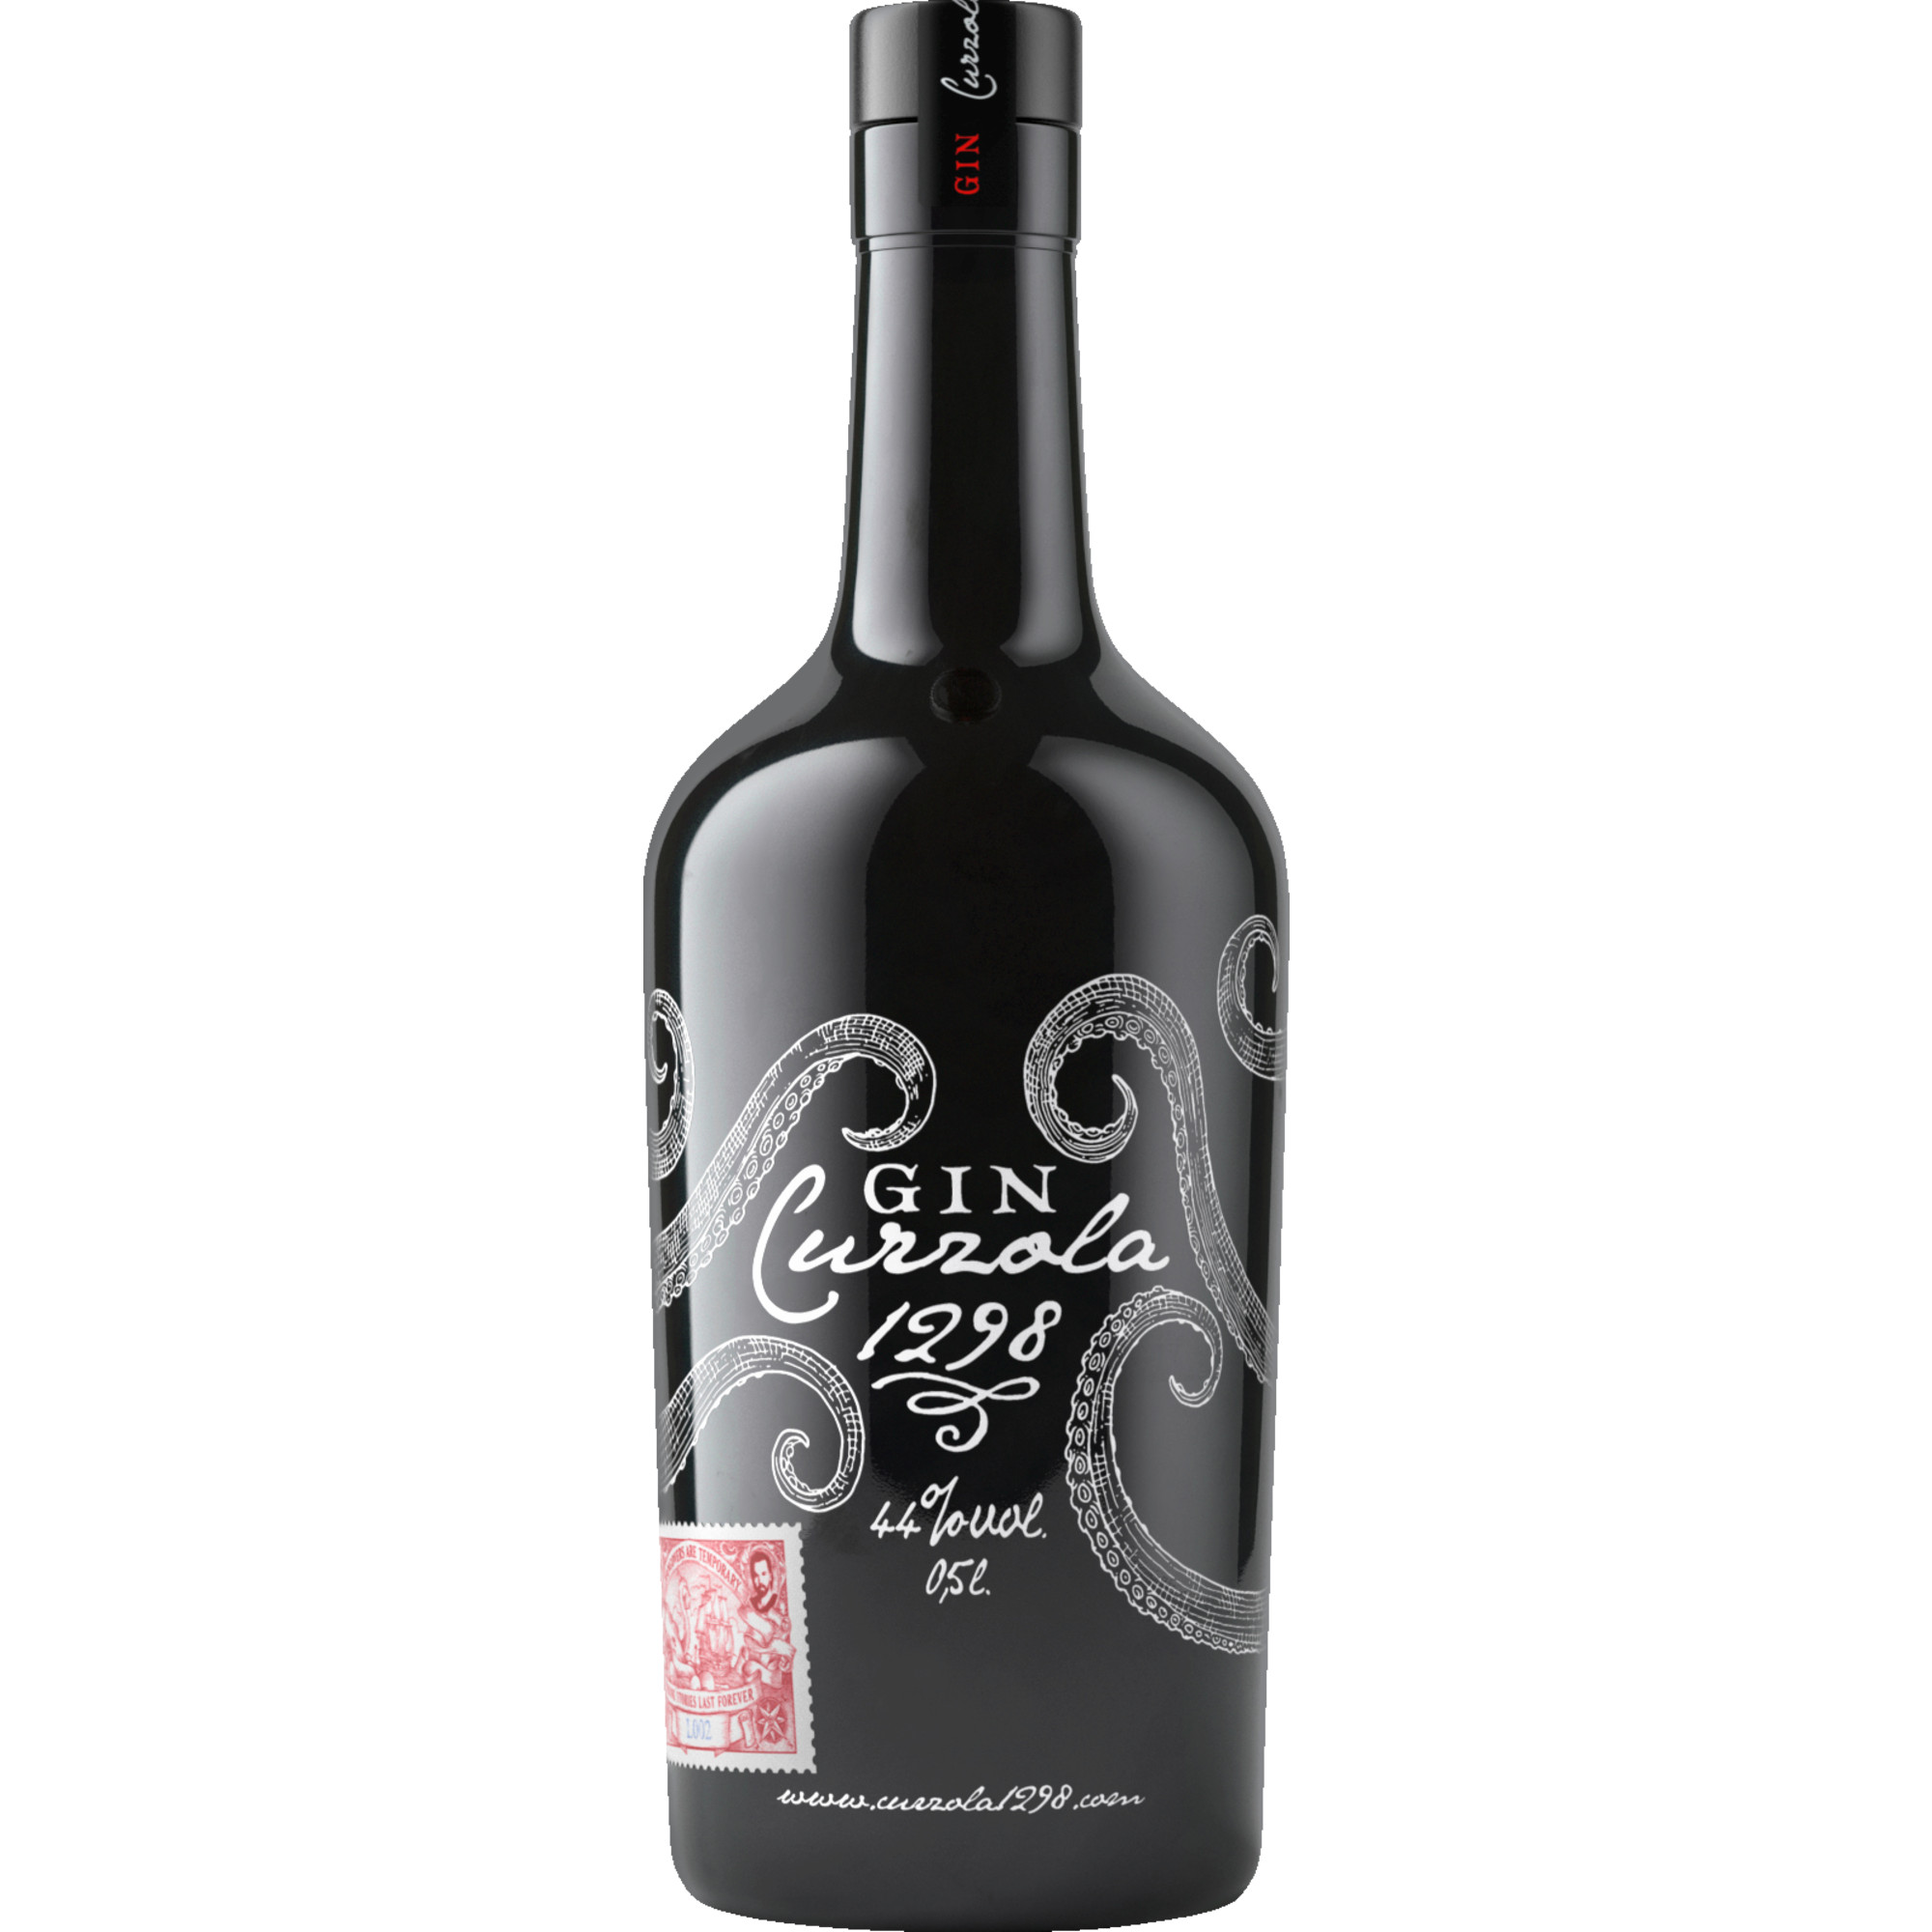 Gin Curzola 1298 Hamburg Dry Gin, 44 % vol. 0,5 L, Spirituosen  Spirituosen Hawesko